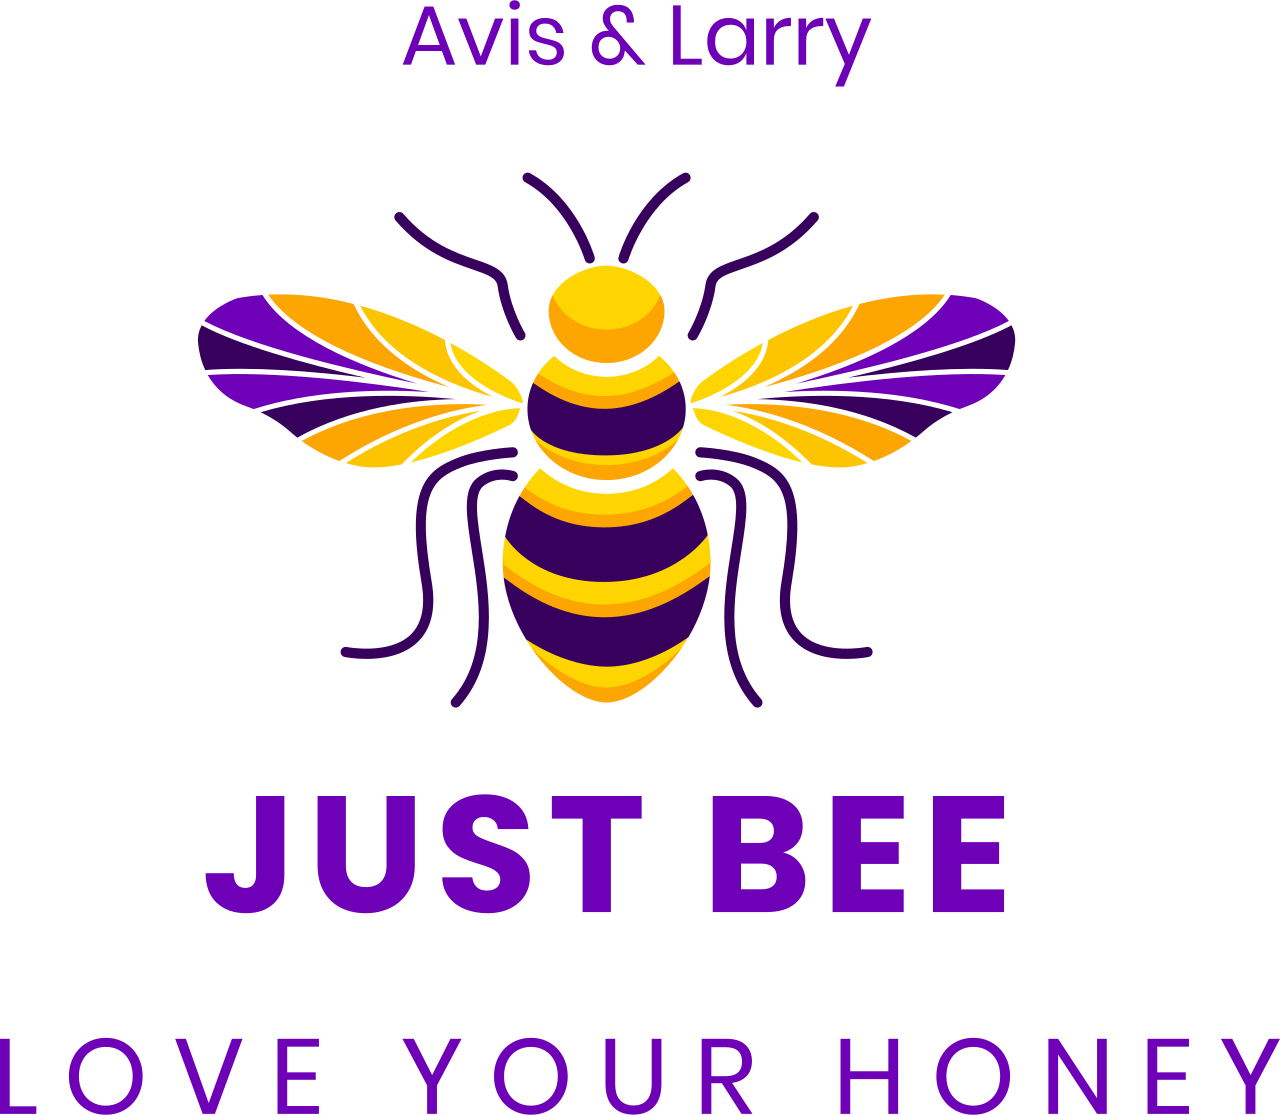 Just Bee's logo